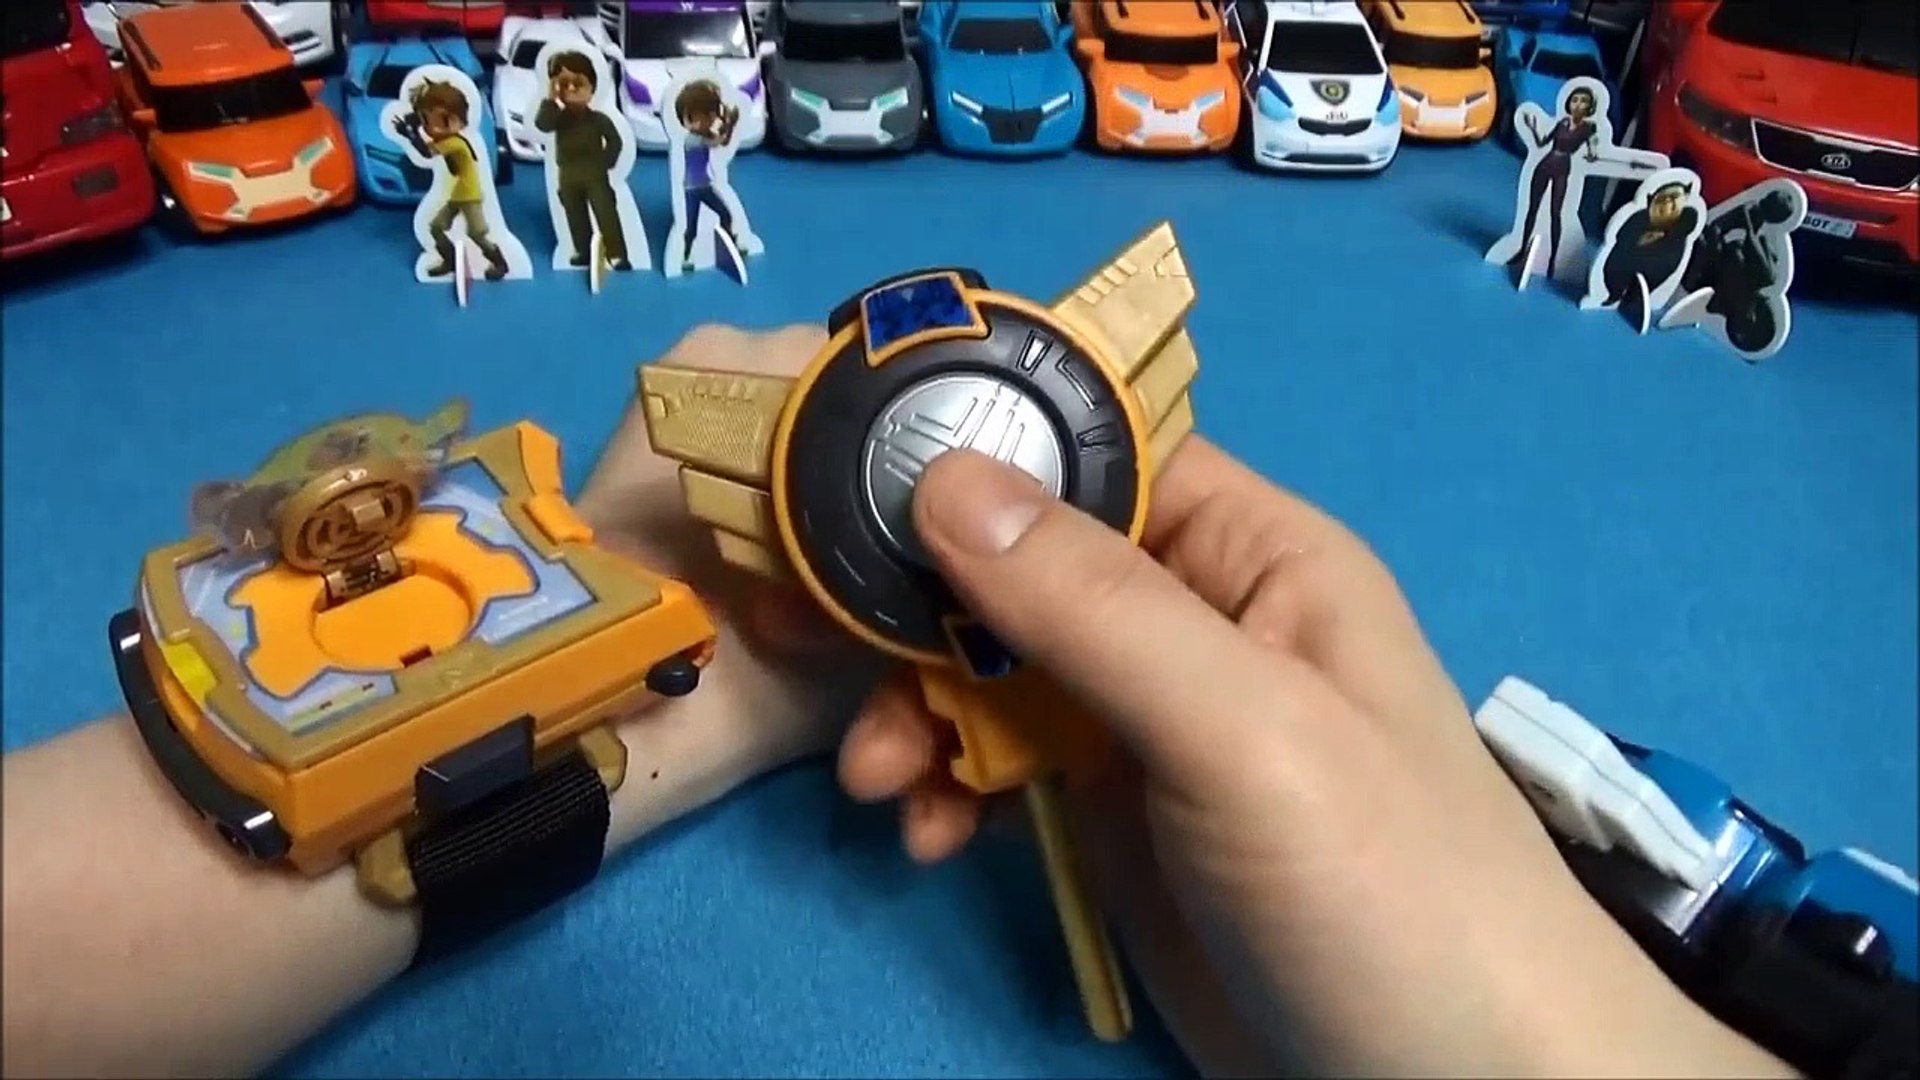 Or robot smart key X Y or Turkey-toys Tobot Car Key toy - Dailymotion Video